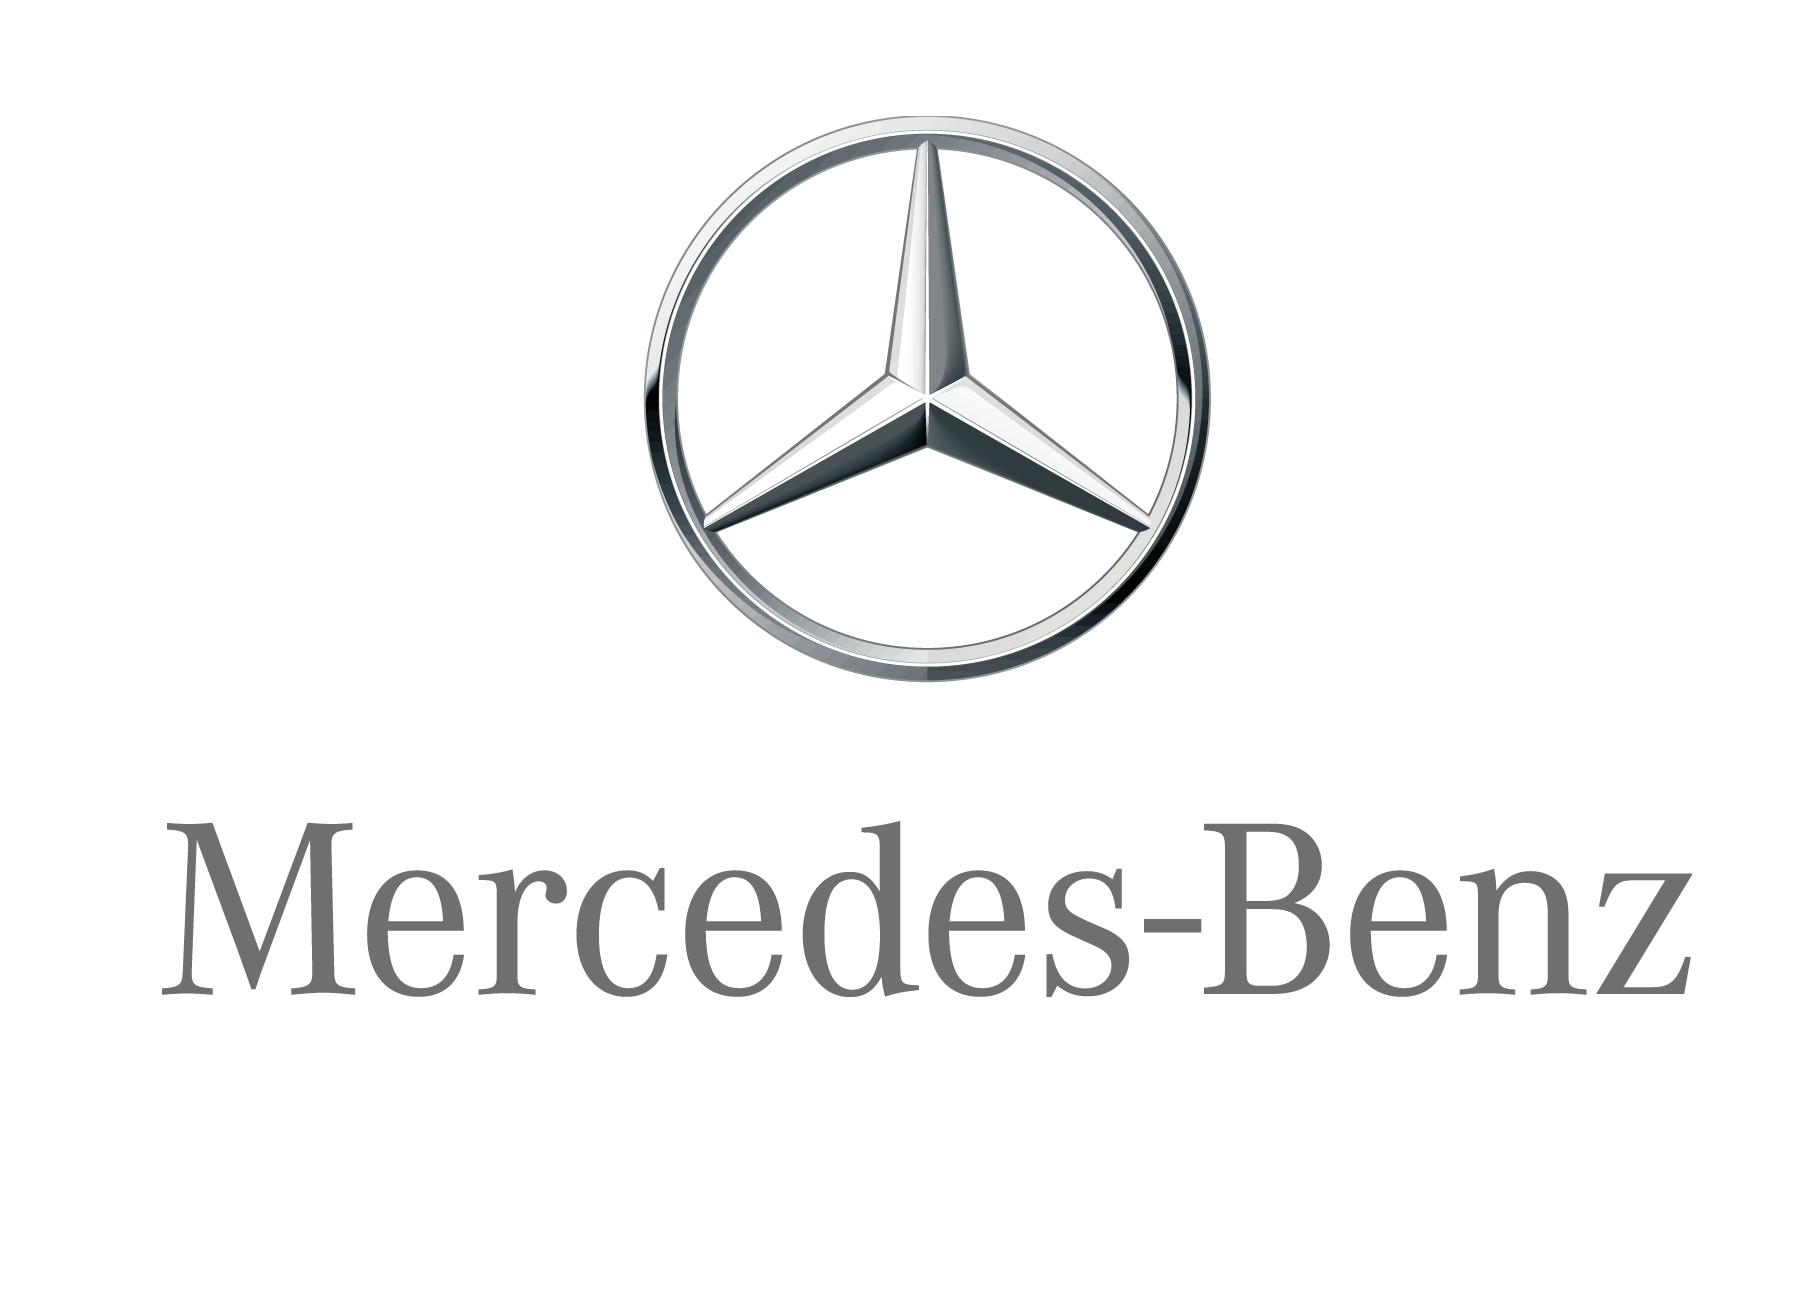 Mercedes Benz Logo PNG High Definition Photo Image pngteam.com